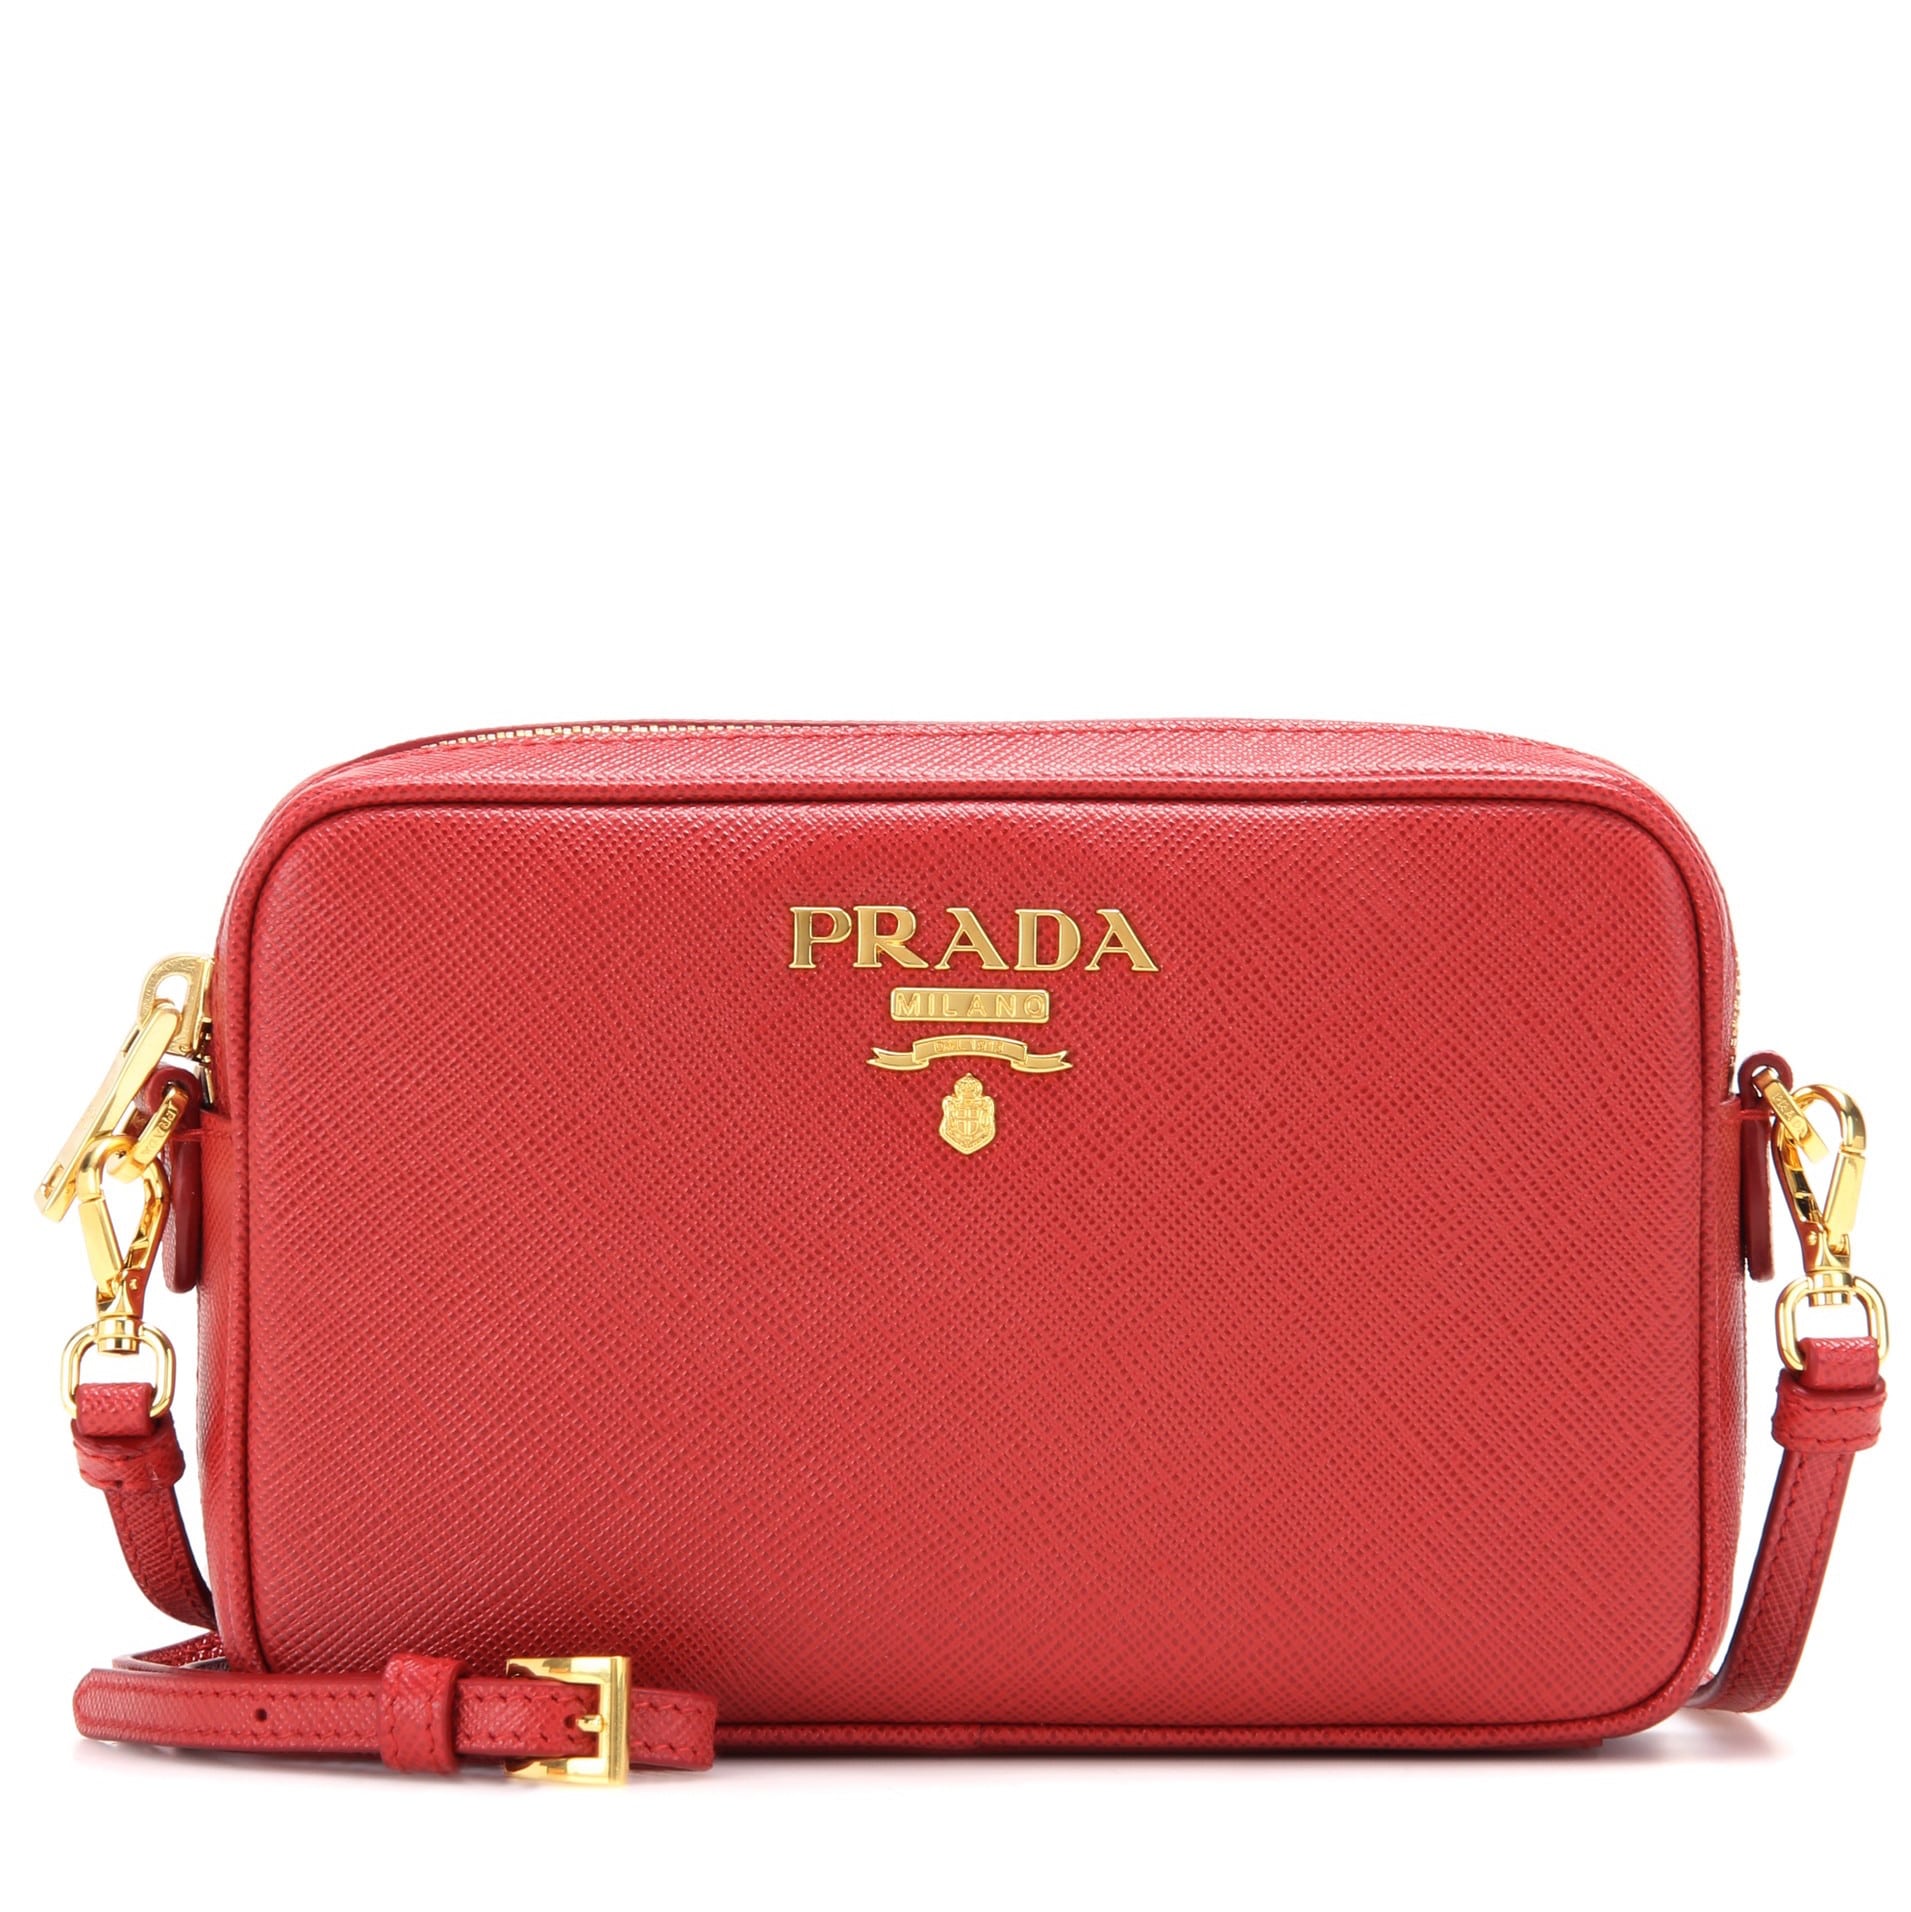 Julian Fashion - PRADA 'Camera' crossbody bag is the ultimate